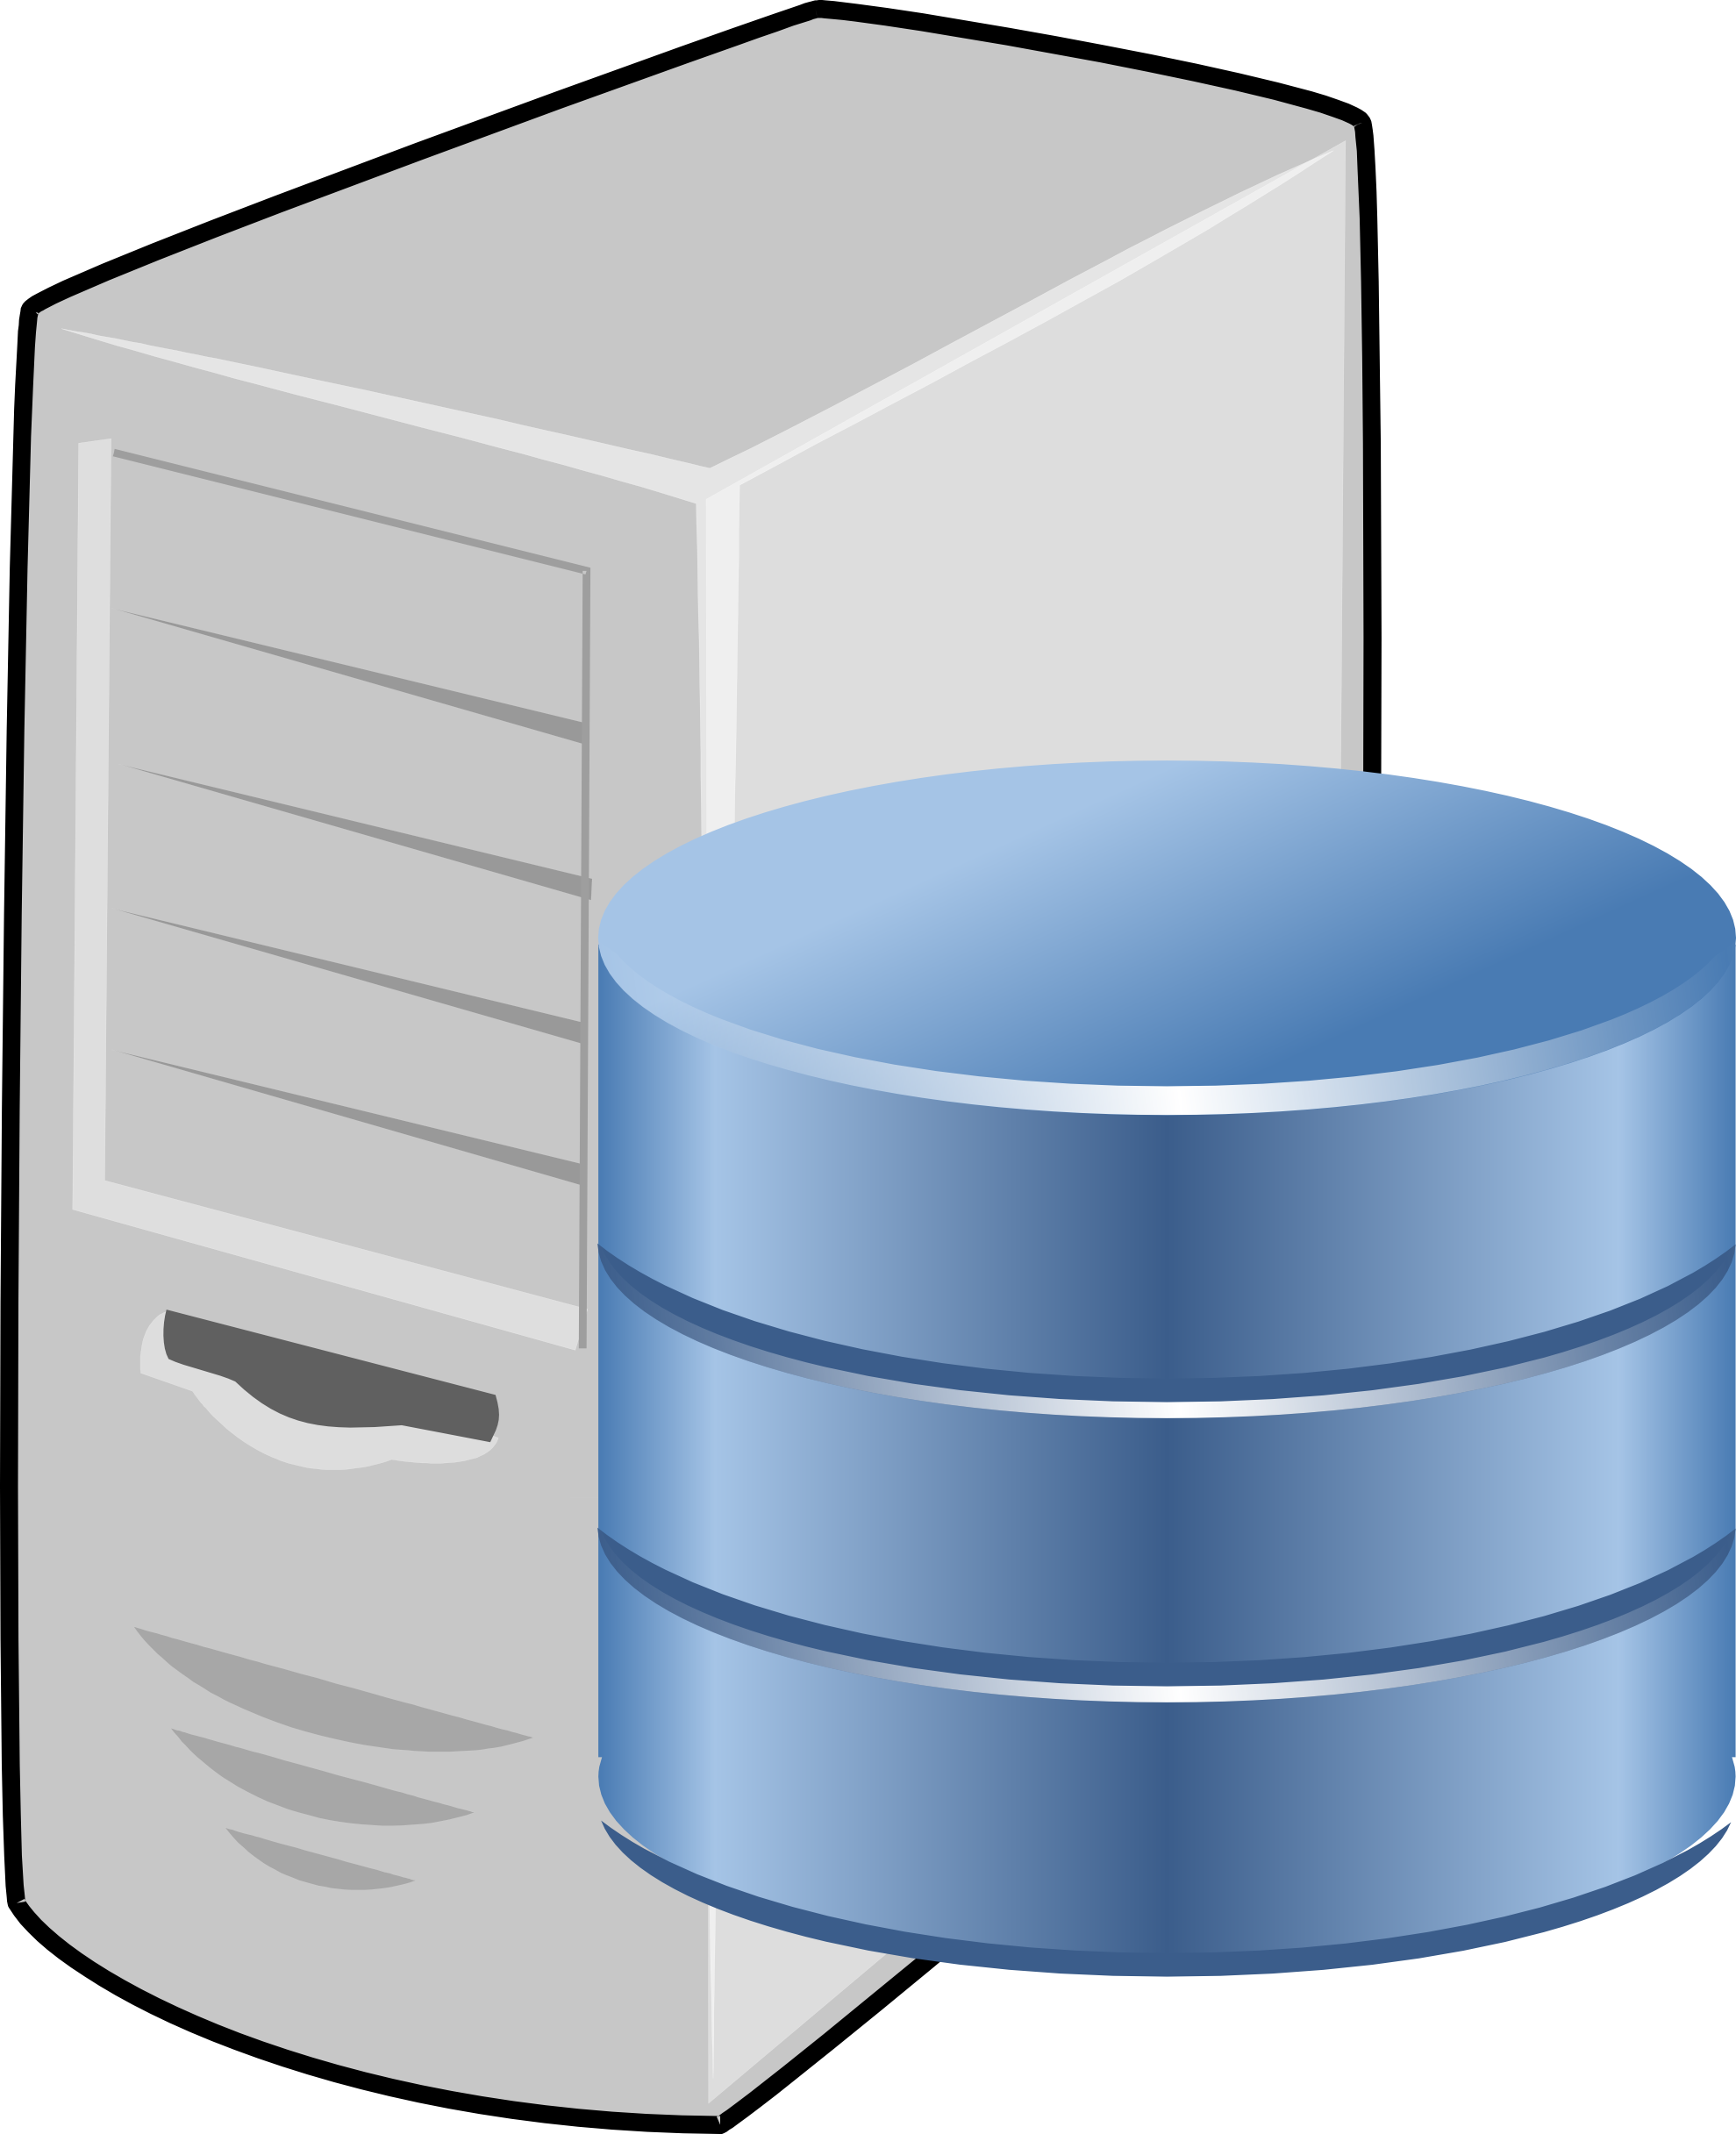 Attendance Data For Central Database - Web Server And Database Server On Same Machine (1979x2433)